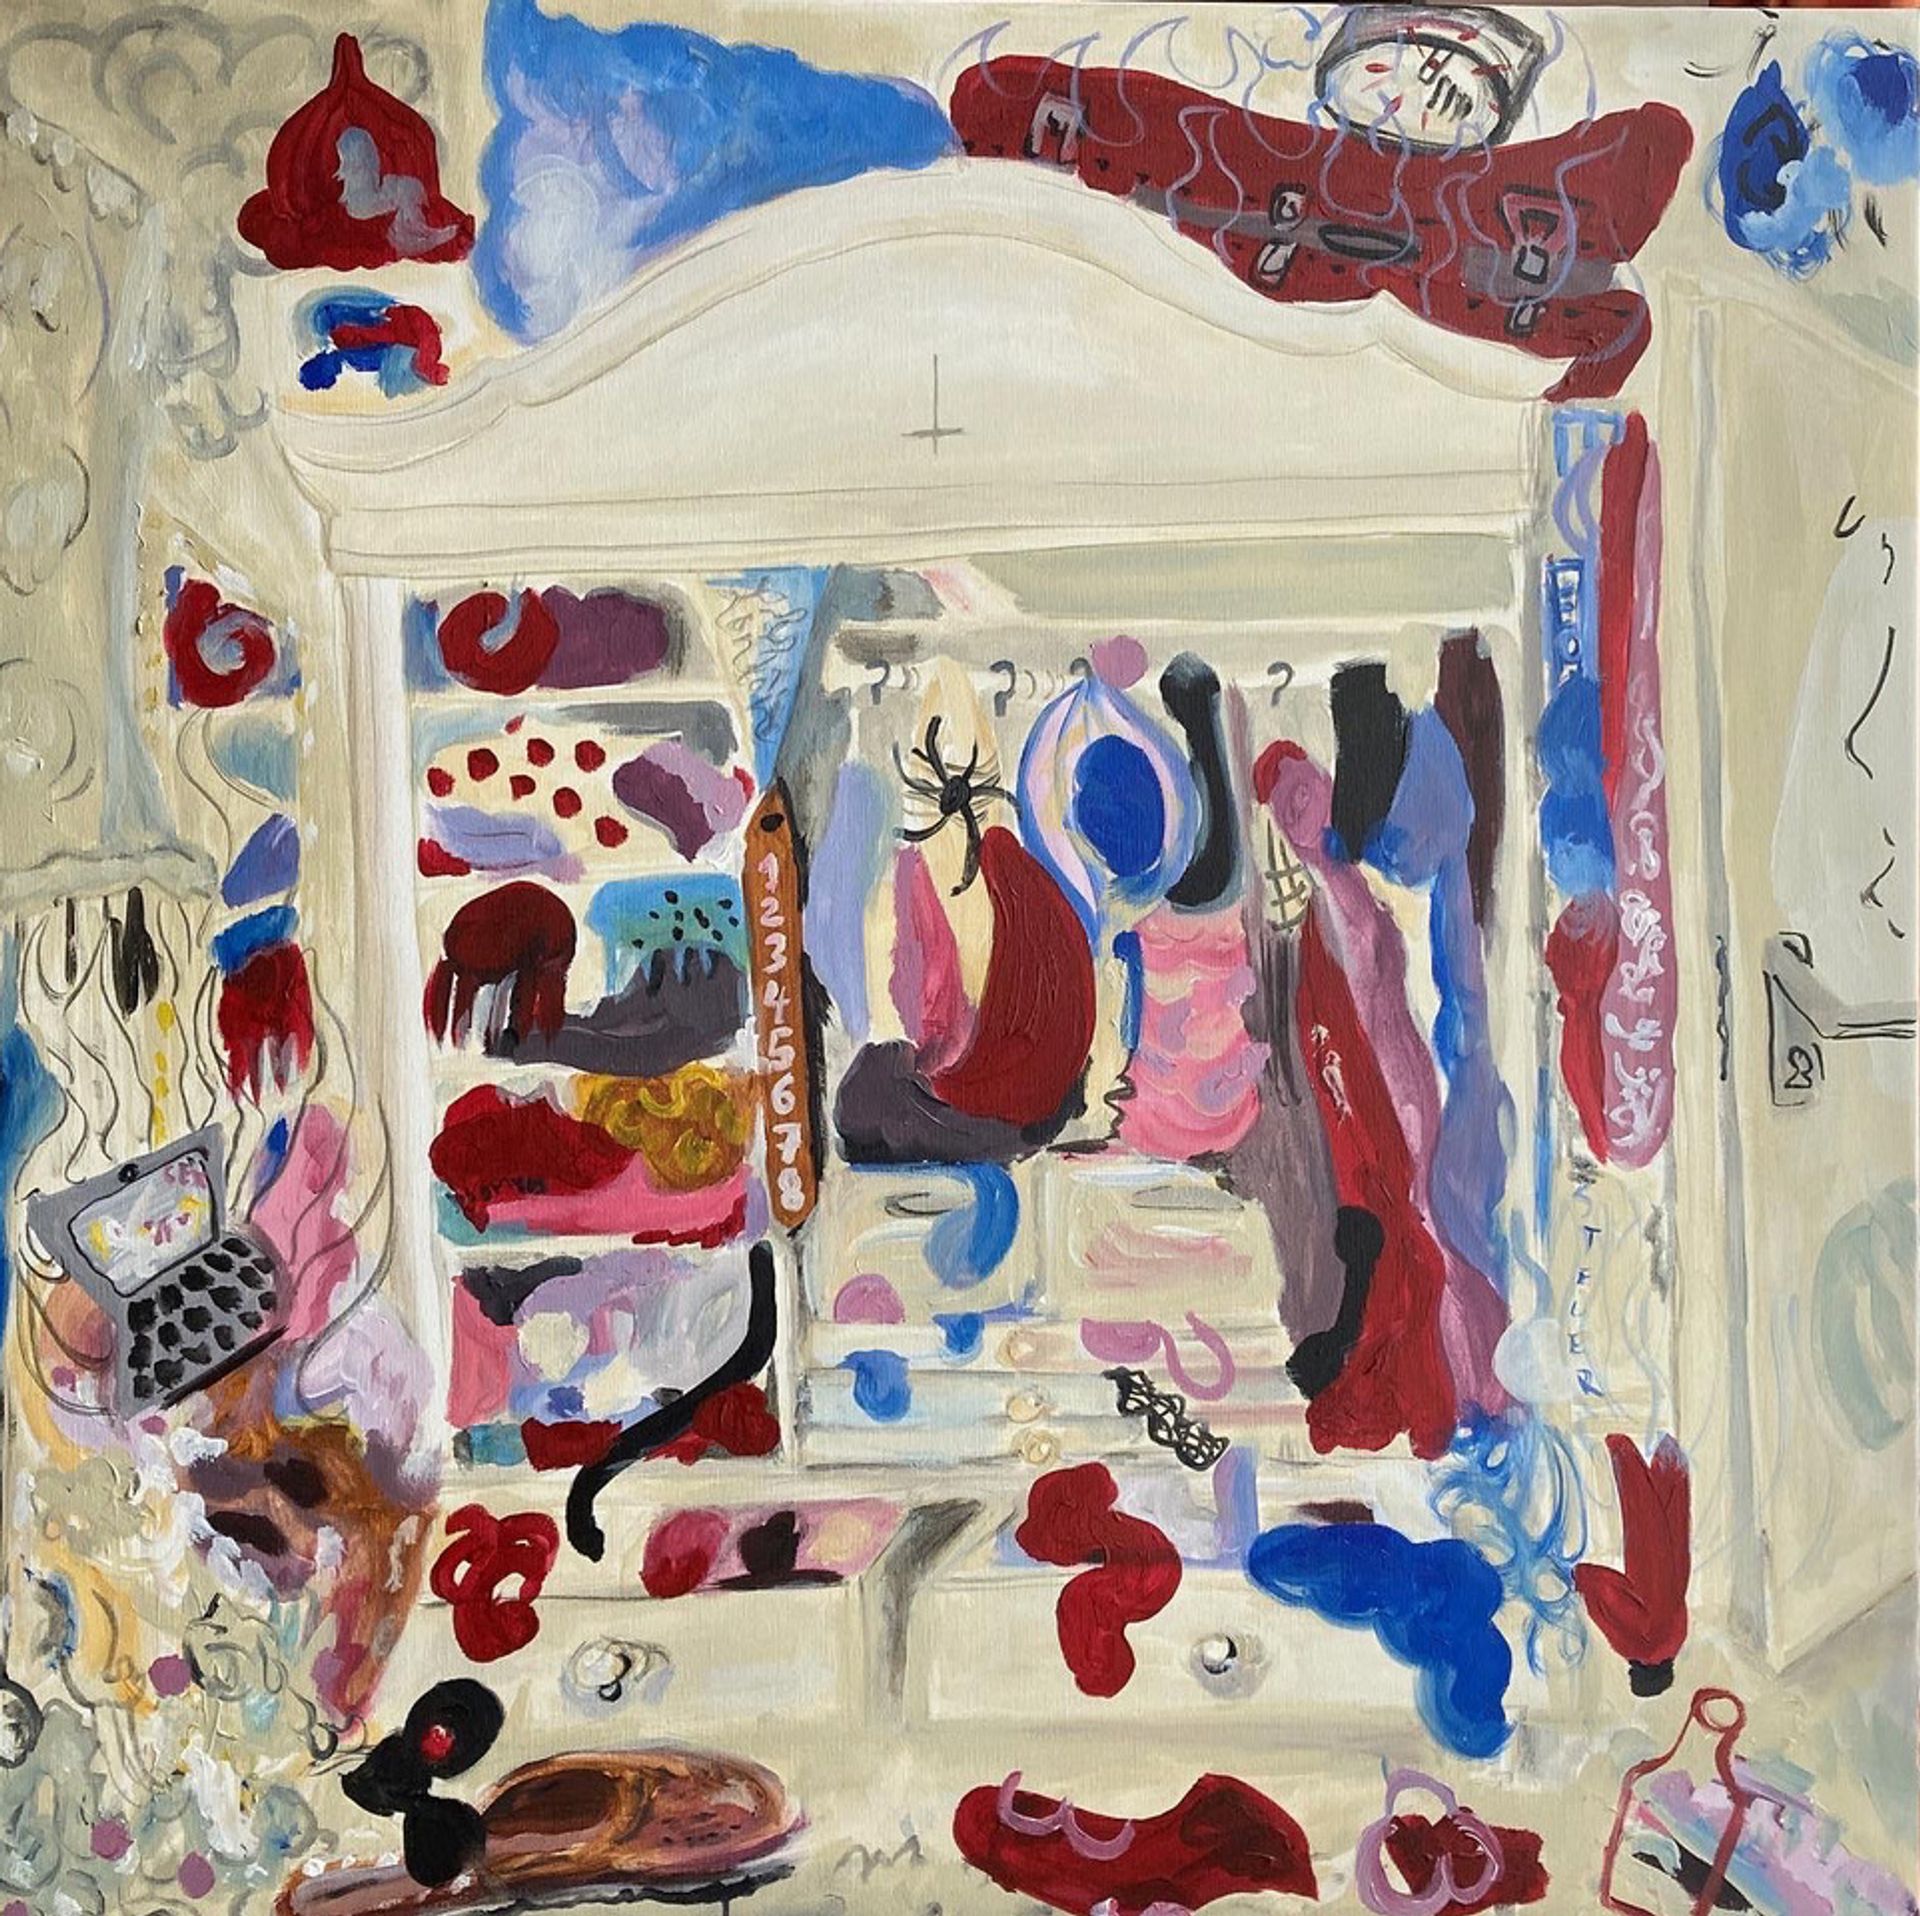 Anna McCarthy, “My Wardrobe”, 2021, acrylic, crayon on canvas, 80 × 80 cm